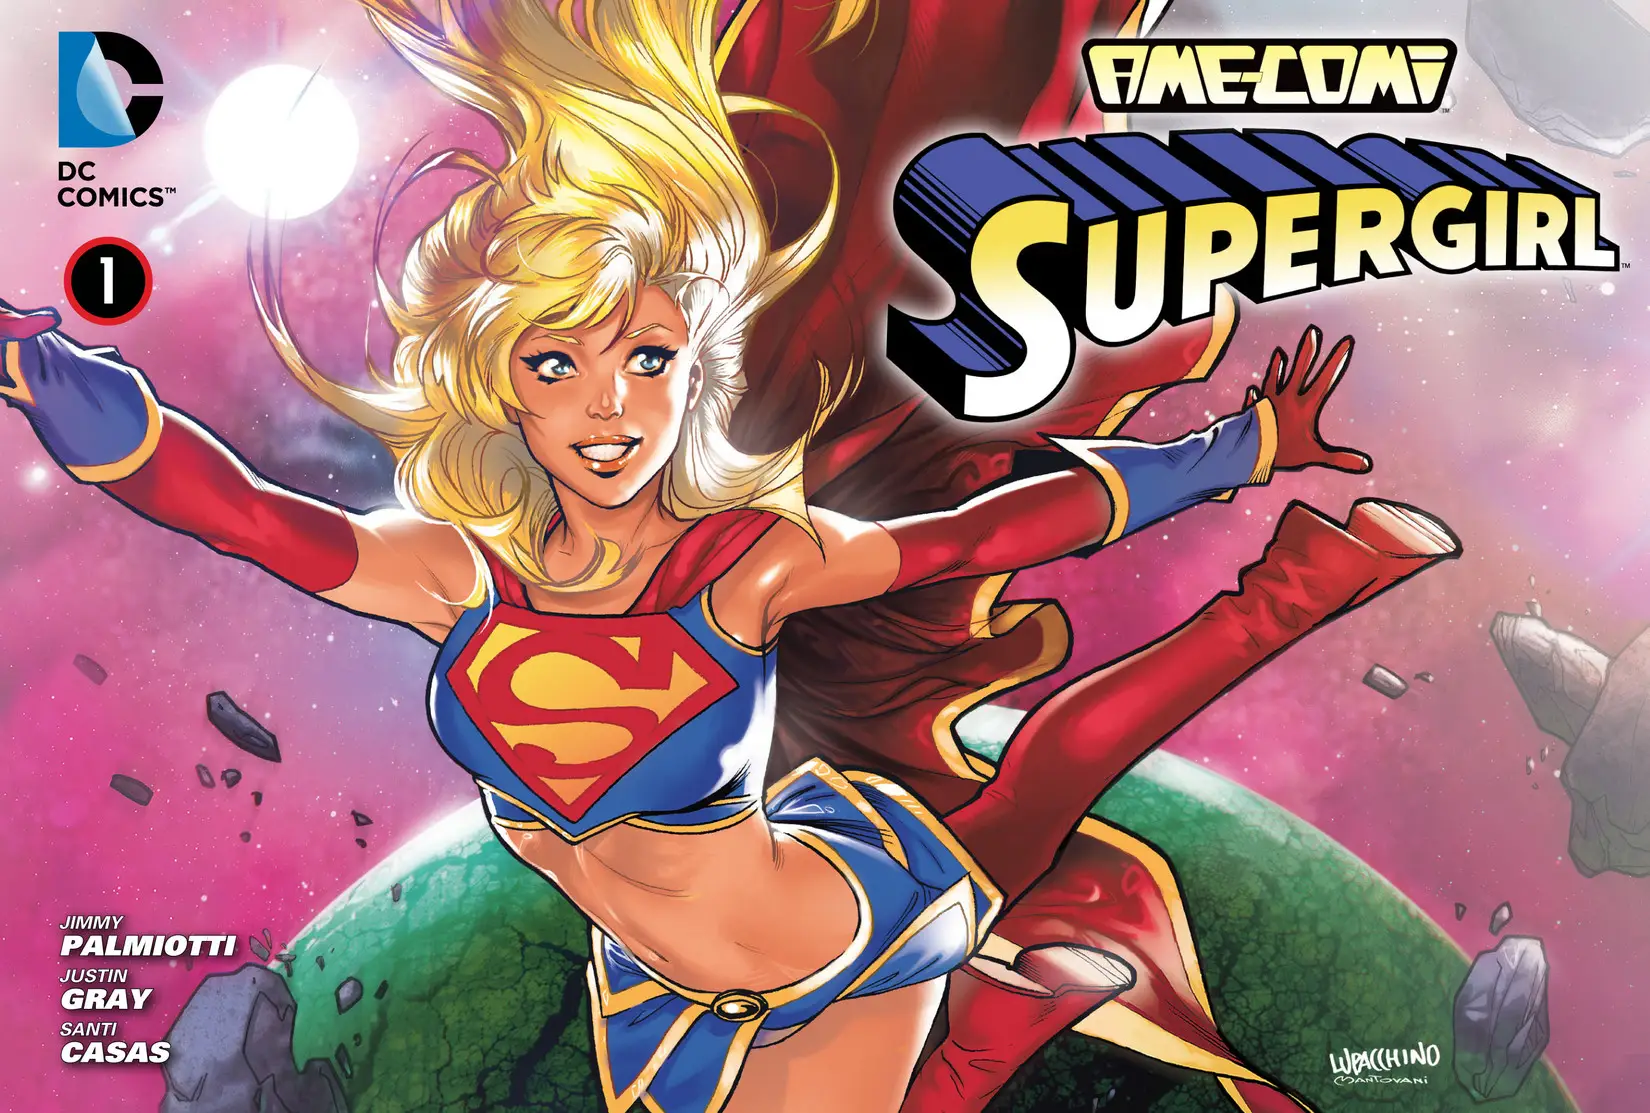 Читать герой старше. Супергерл комикс. Ame комикс. Ame-comi v: Supergirl. Комикс Цоми.